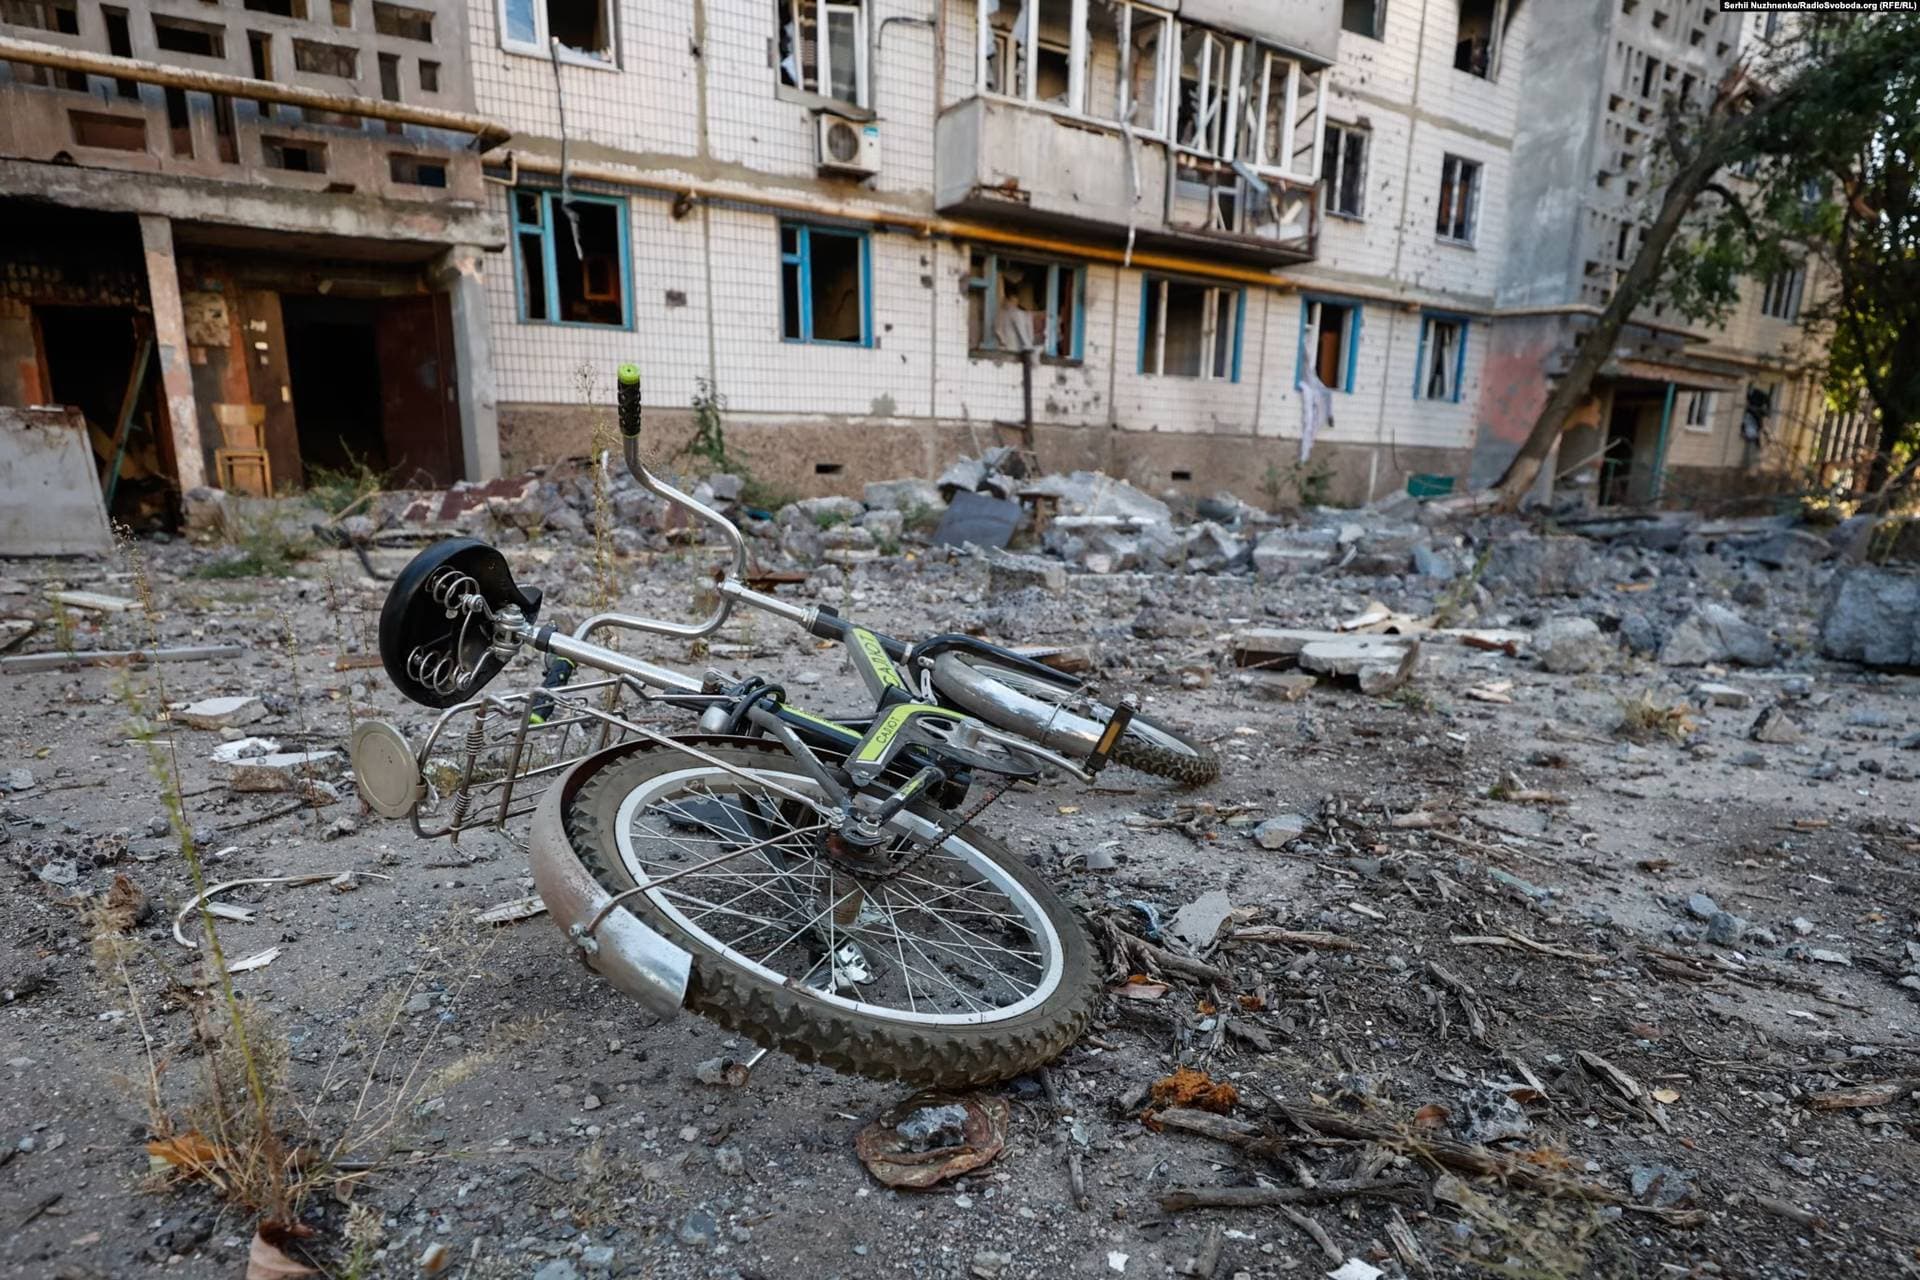 A child's bike in a rubble-strewn courtyard